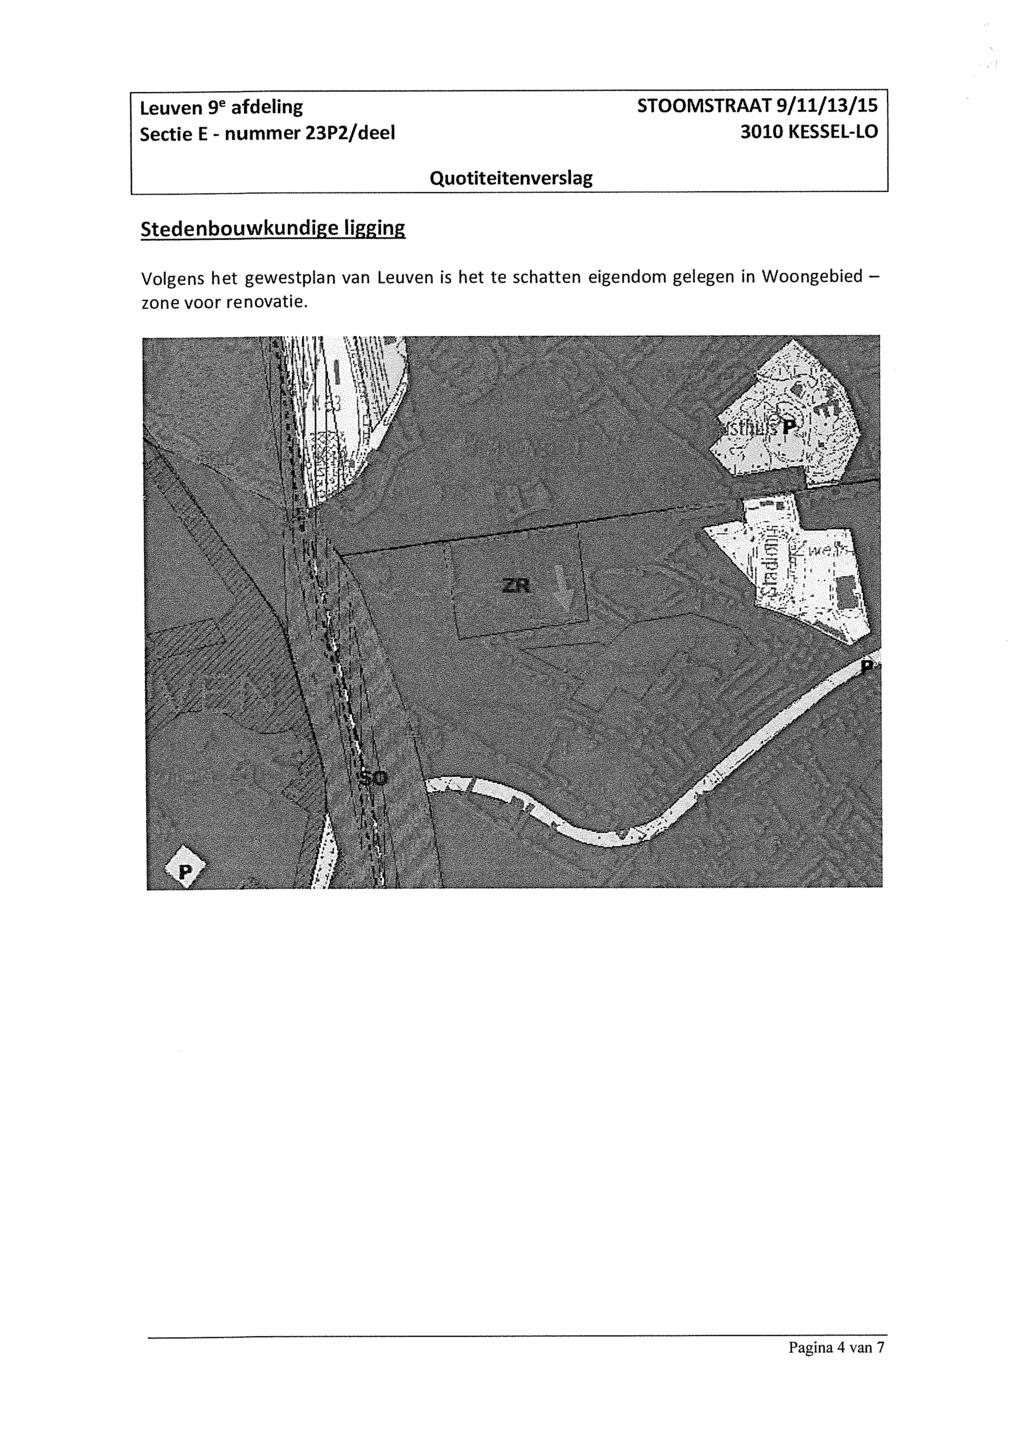 Leuven 9e afdeling STOOMSTRAAT 9//3/5 Stedenbouwkundige ligging Volgens het gewestplan van